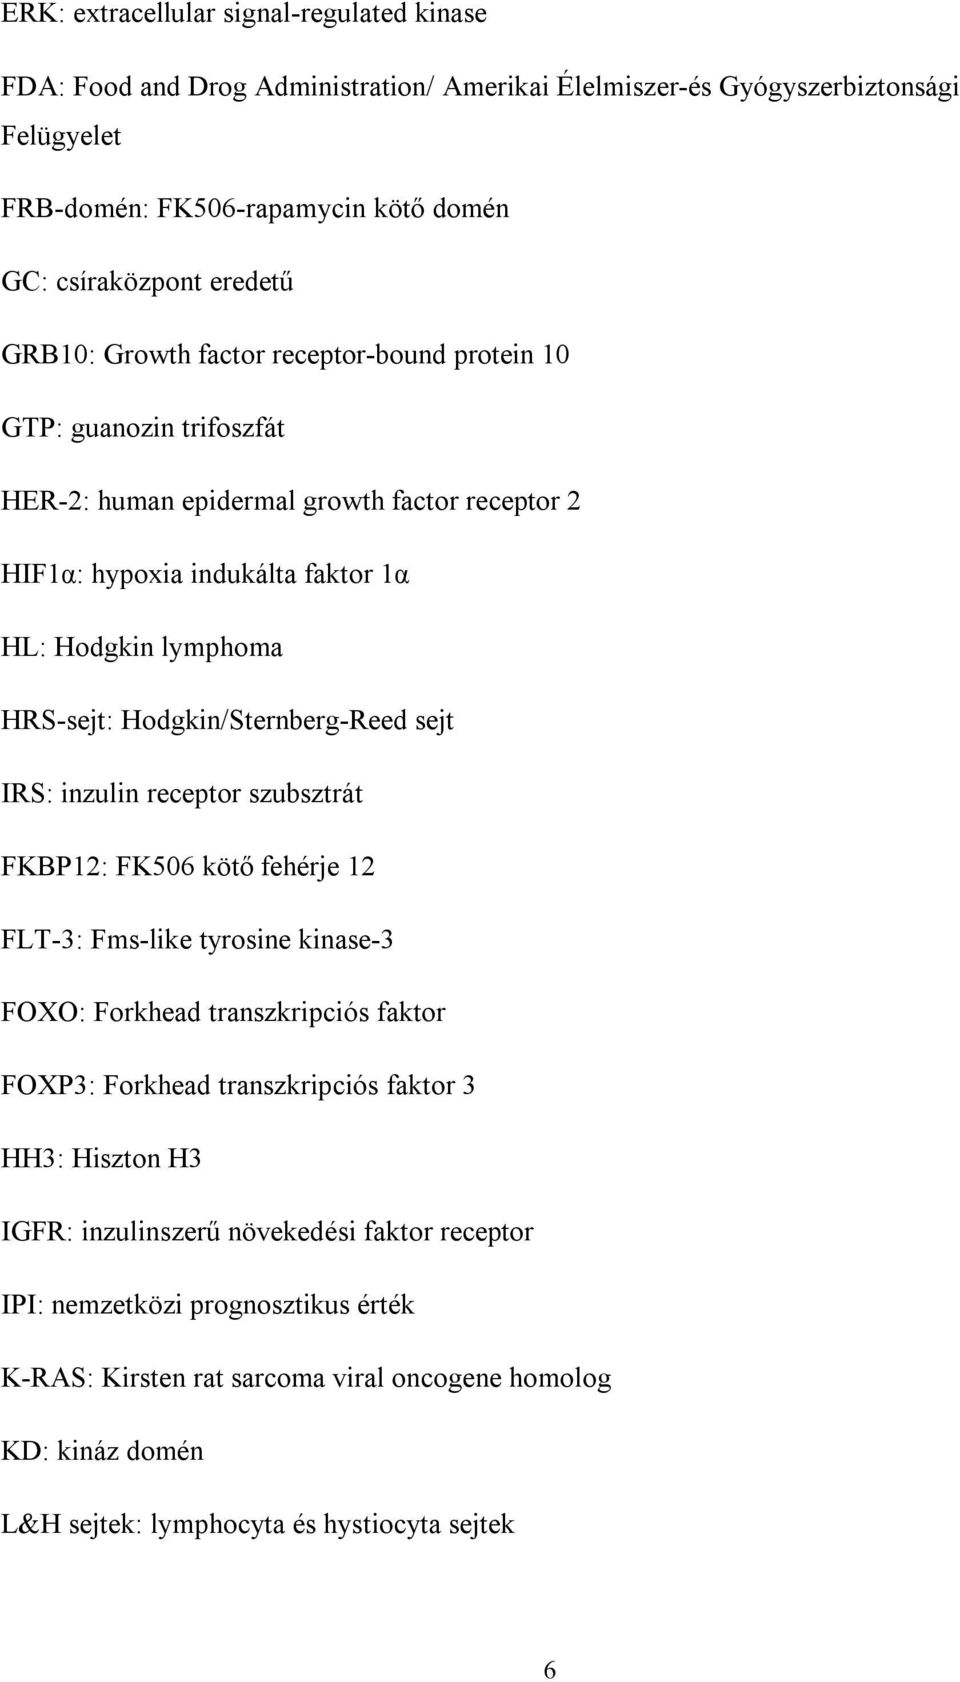 Hodgkin/Sternberg-Reed sejt IRS: inzulin receptor szubsztrát FKBP12: FK506 kötő fehérje 12 FLT-3: Fms-like tyrosine kinase-3 FOXO: Forkhead transzkripciós faktor FOXP3: Forkhead transzkripciós